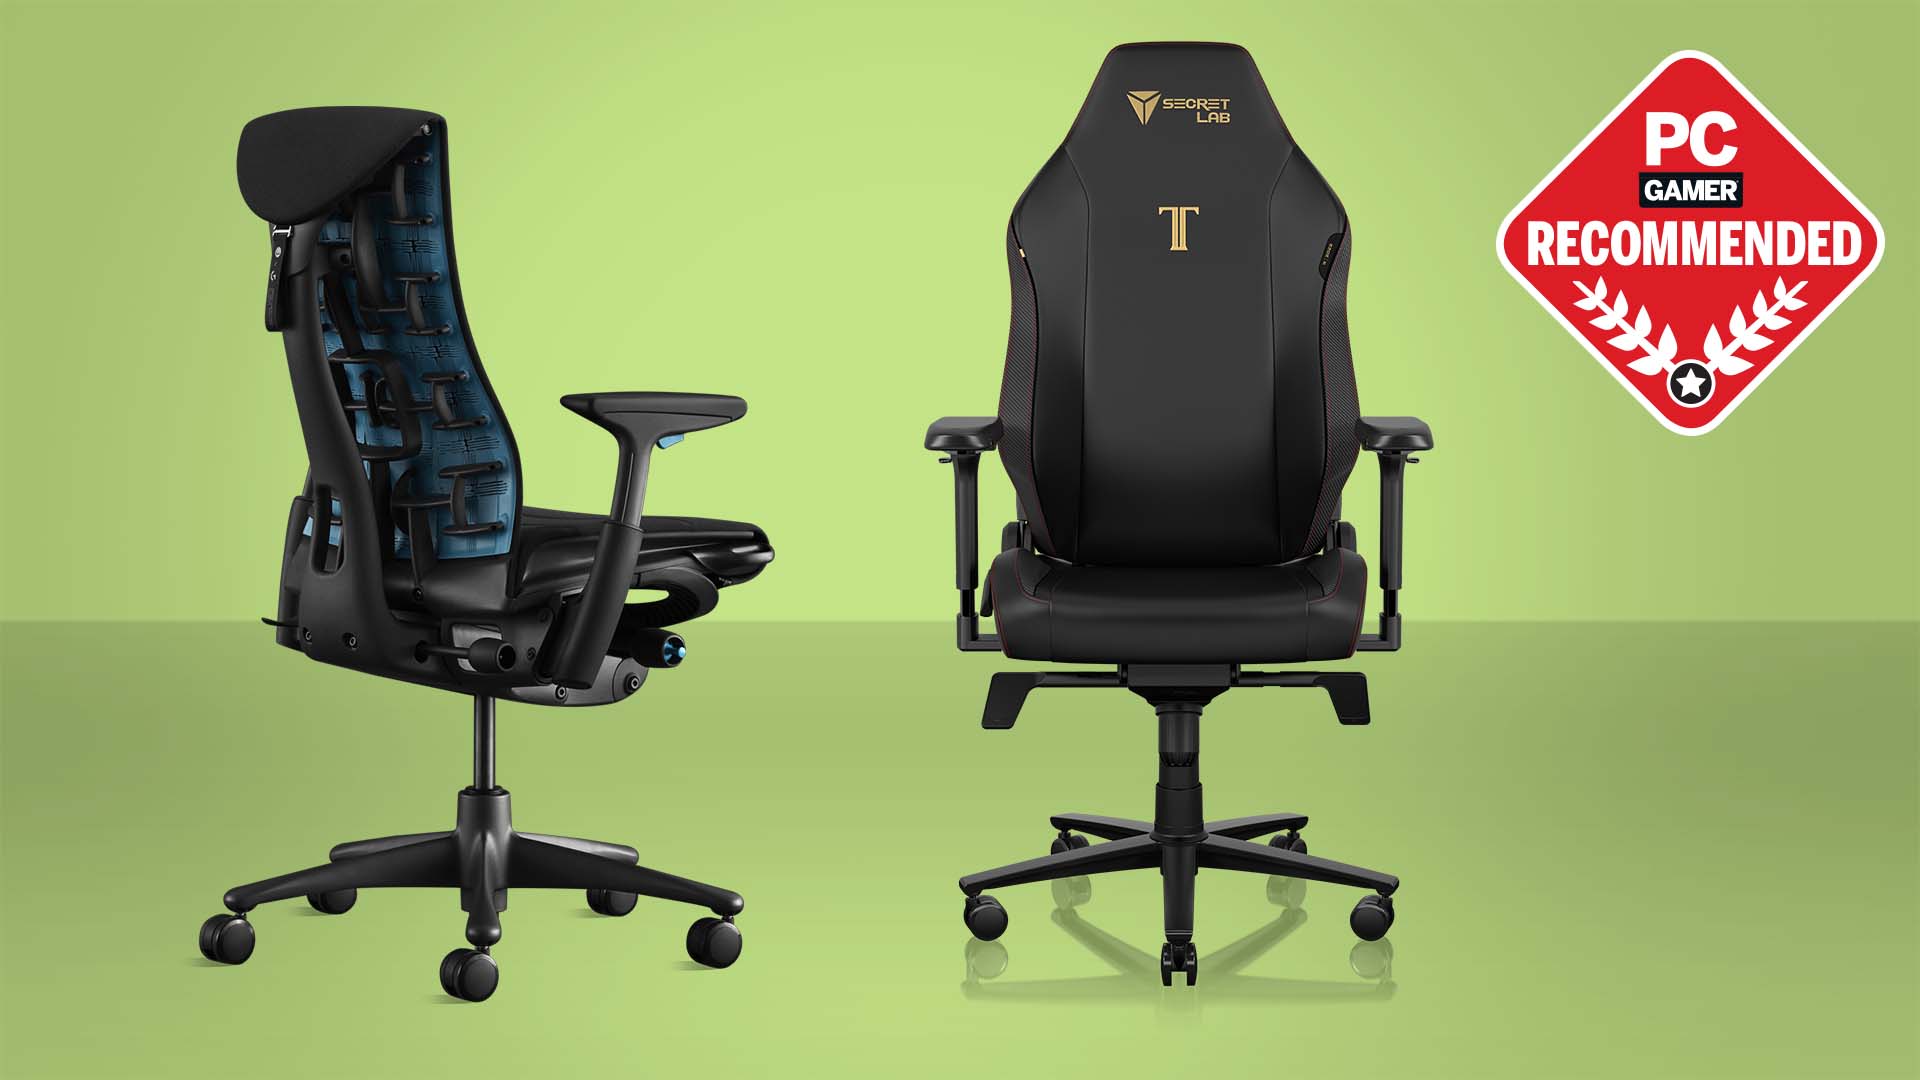 Blue Best gaming chair brands uk from Razer